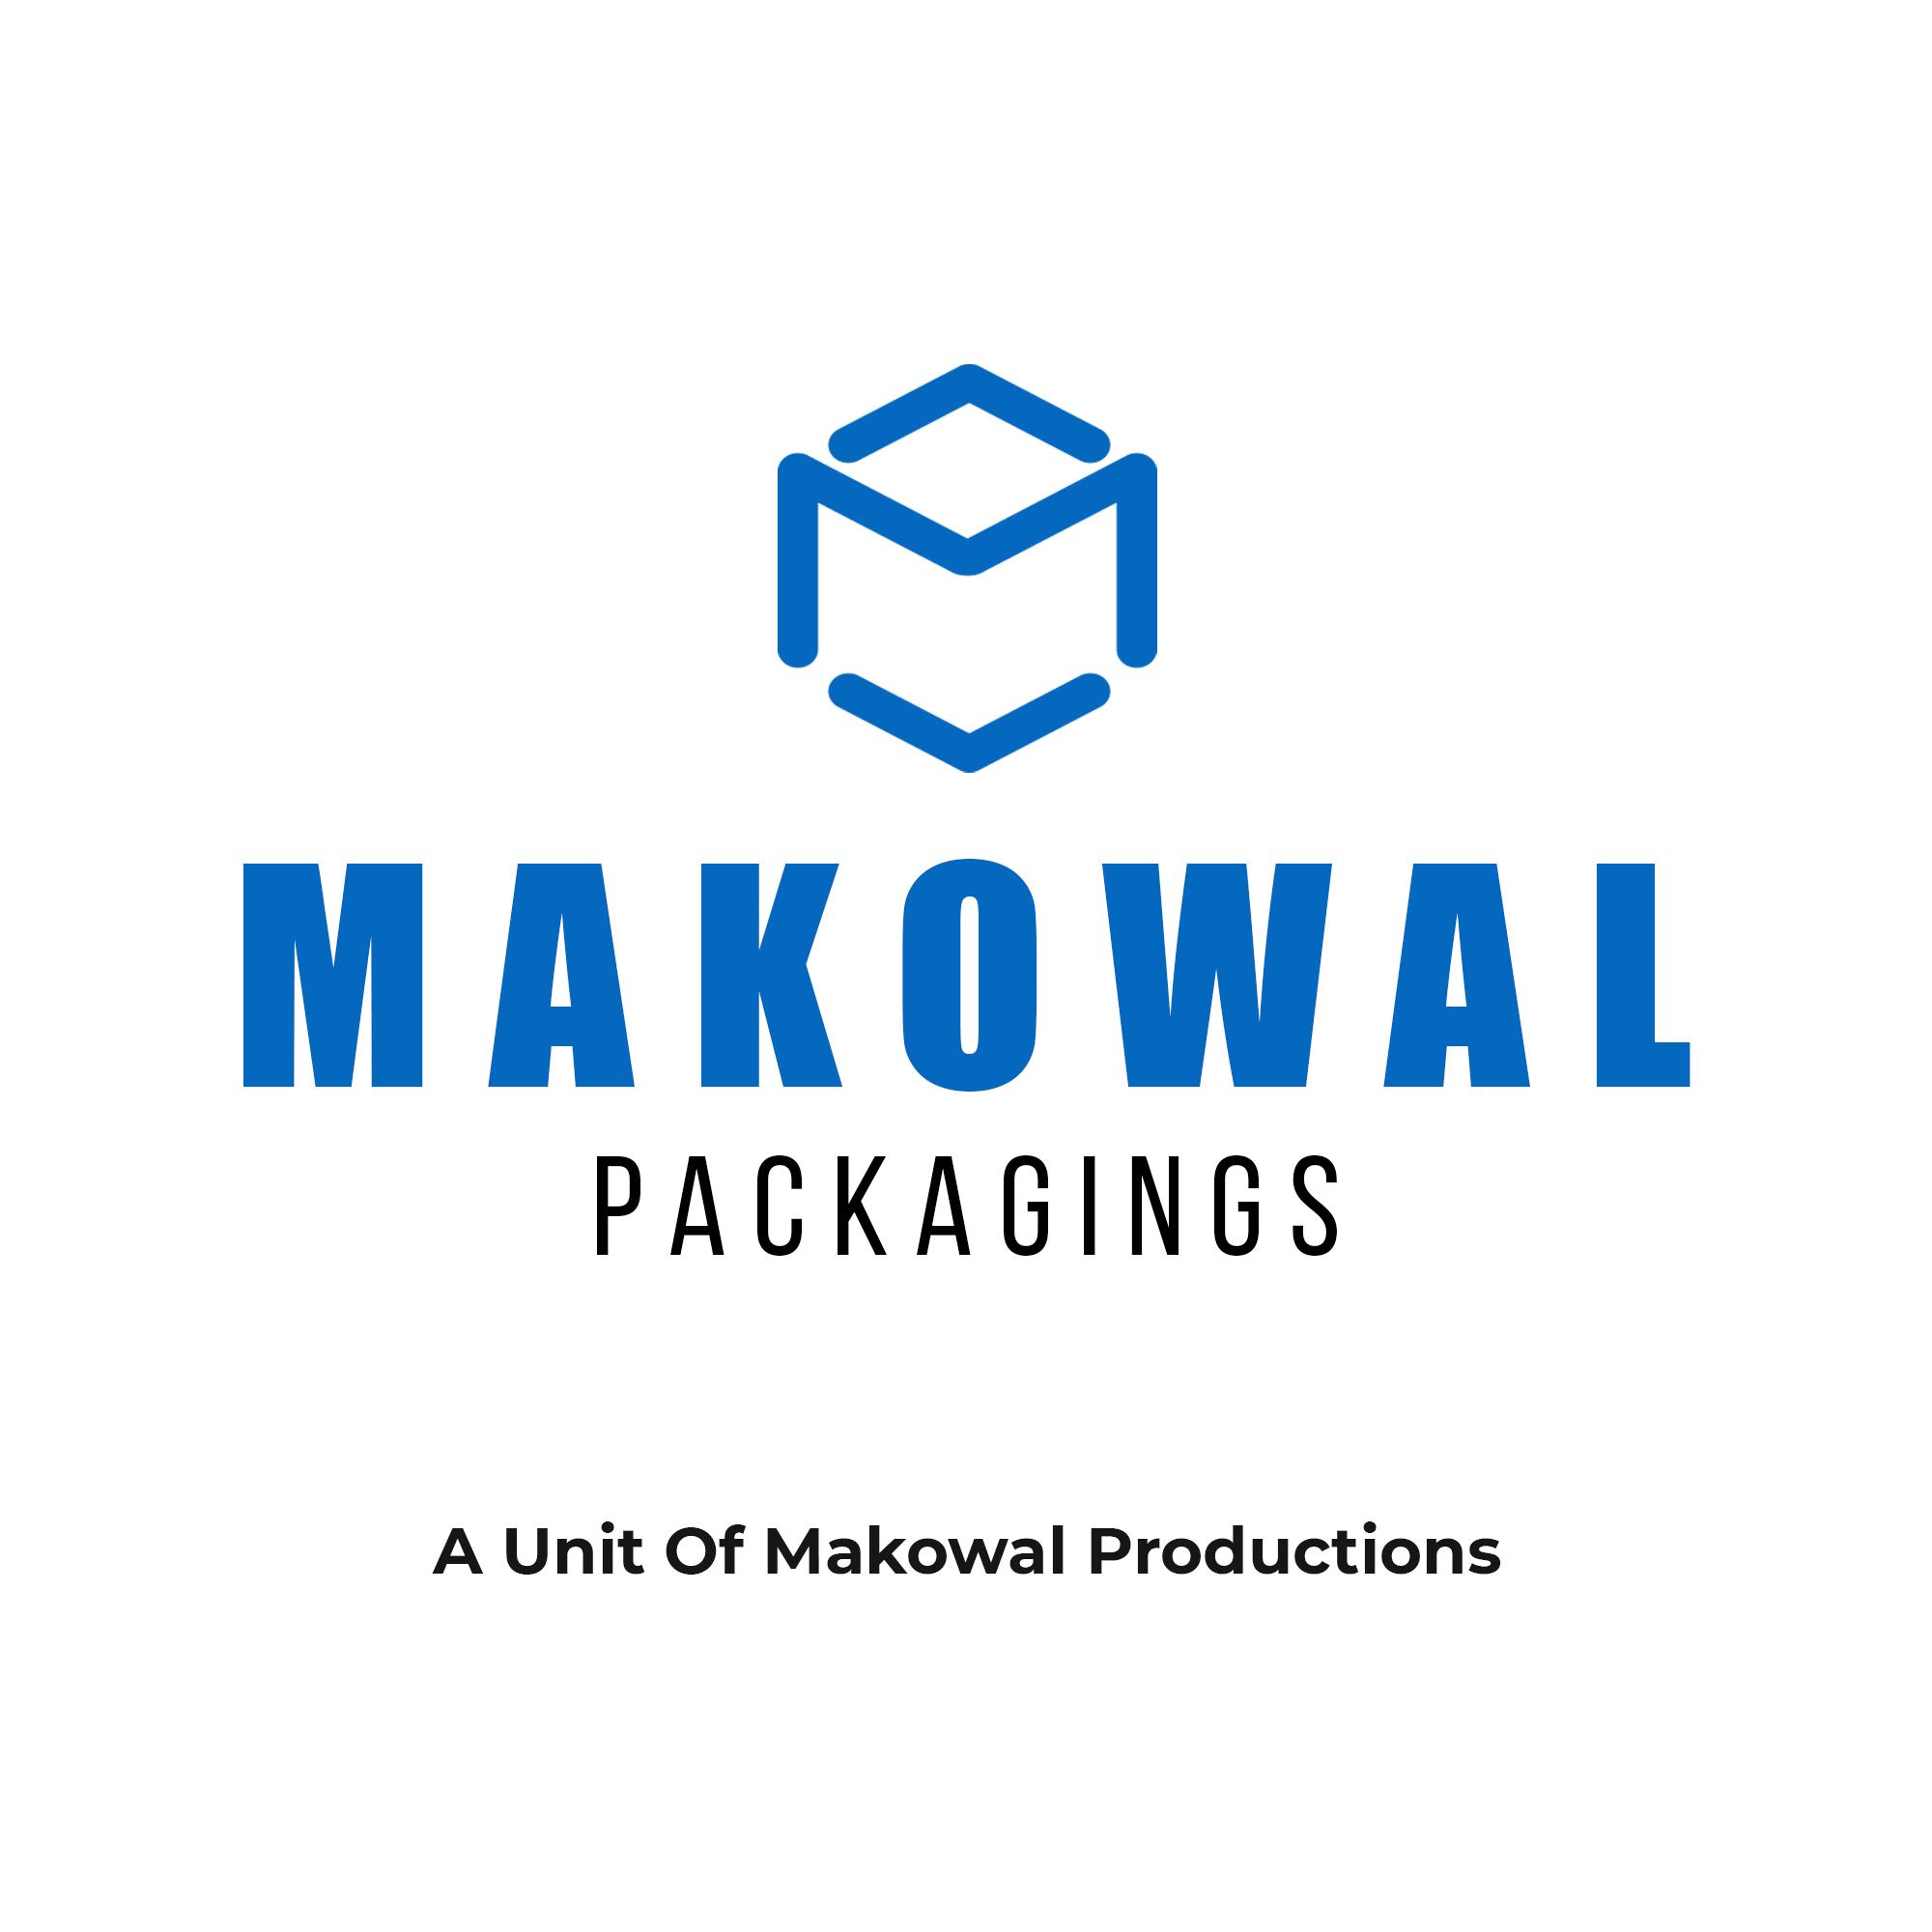 Makowal Packagings